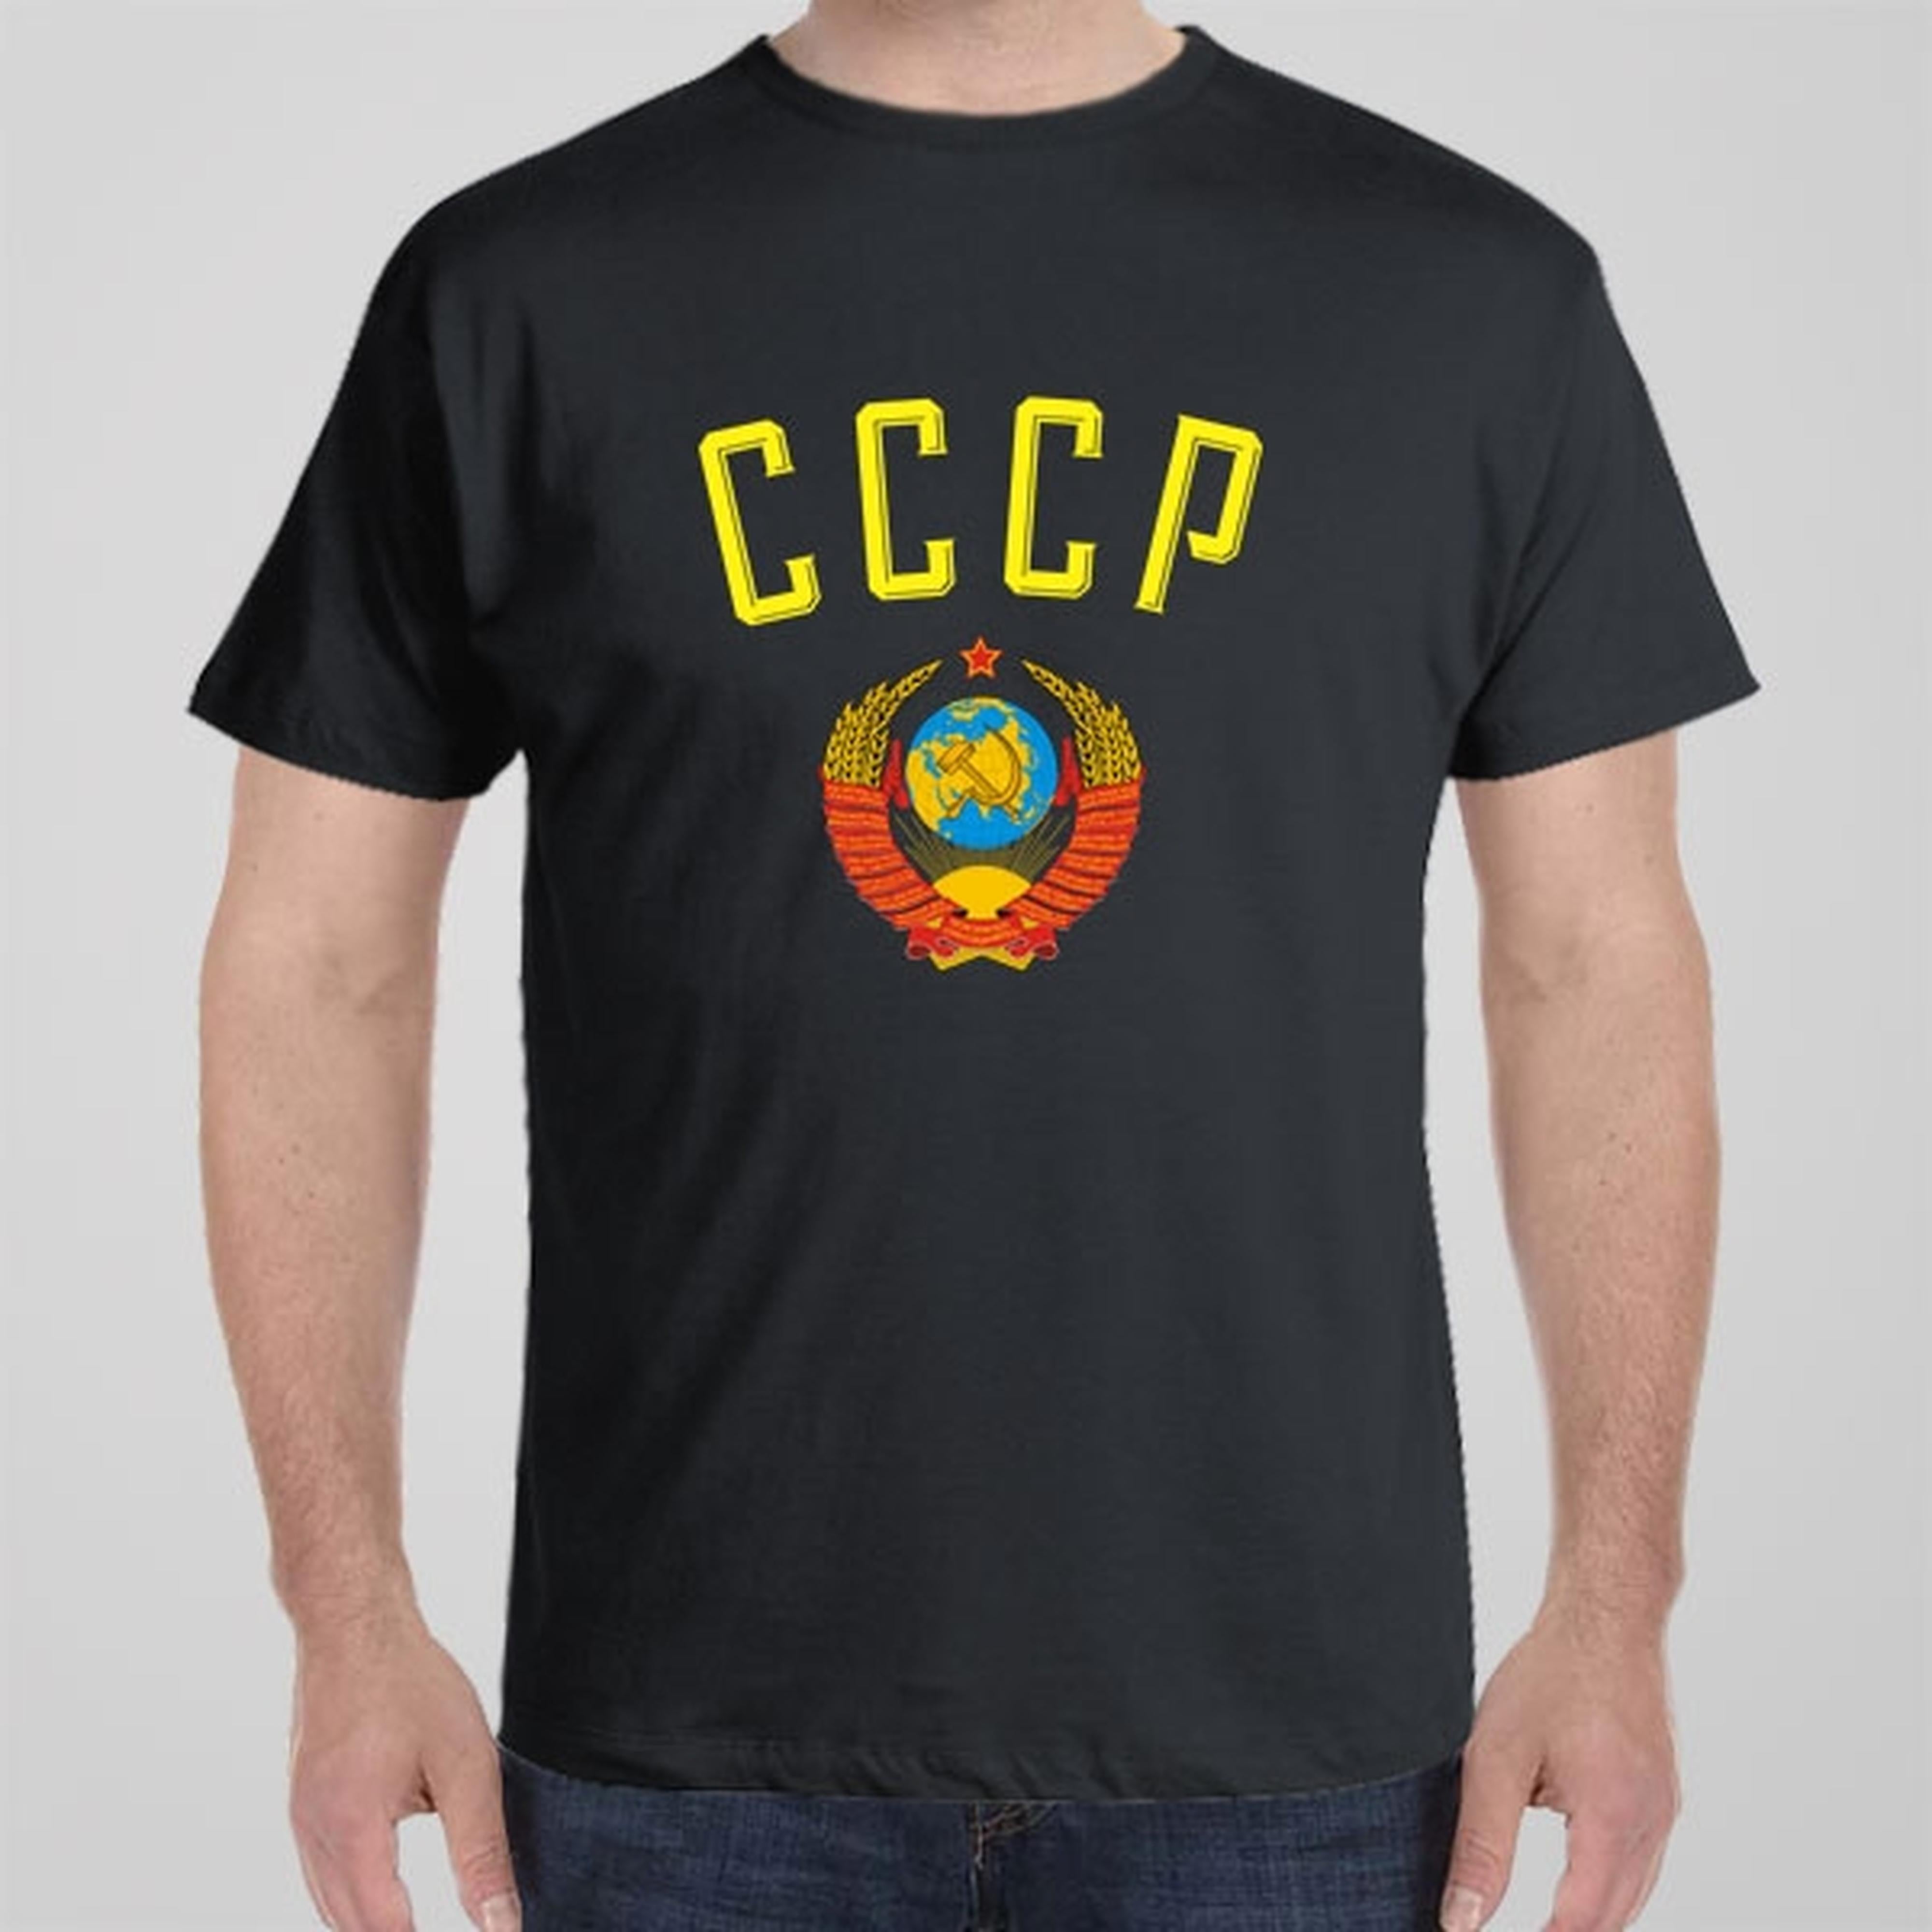 cccp-2-t-shirt